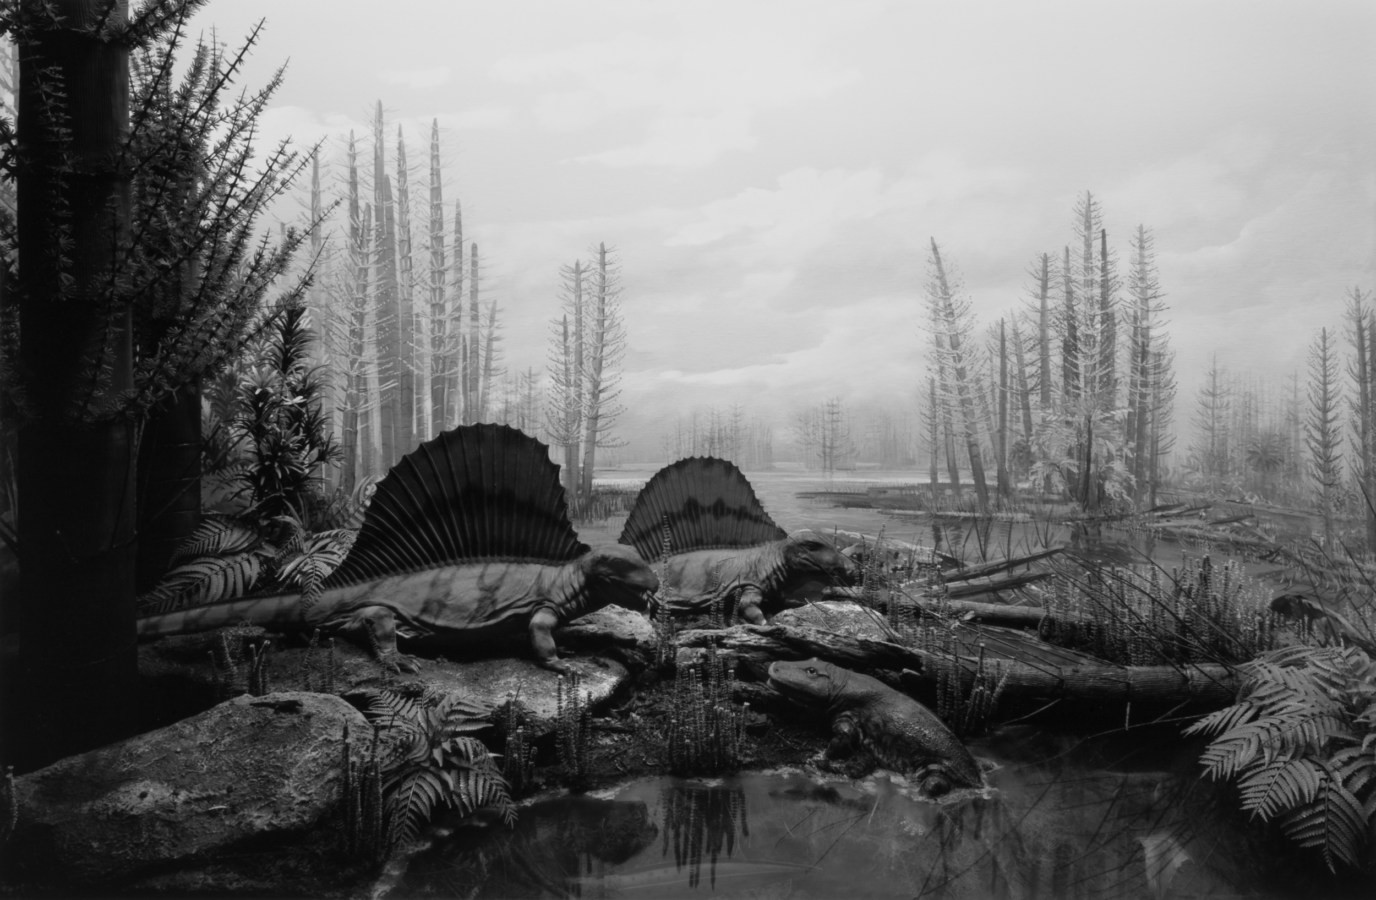 Black and white photograph of a prehistoric marshland scene